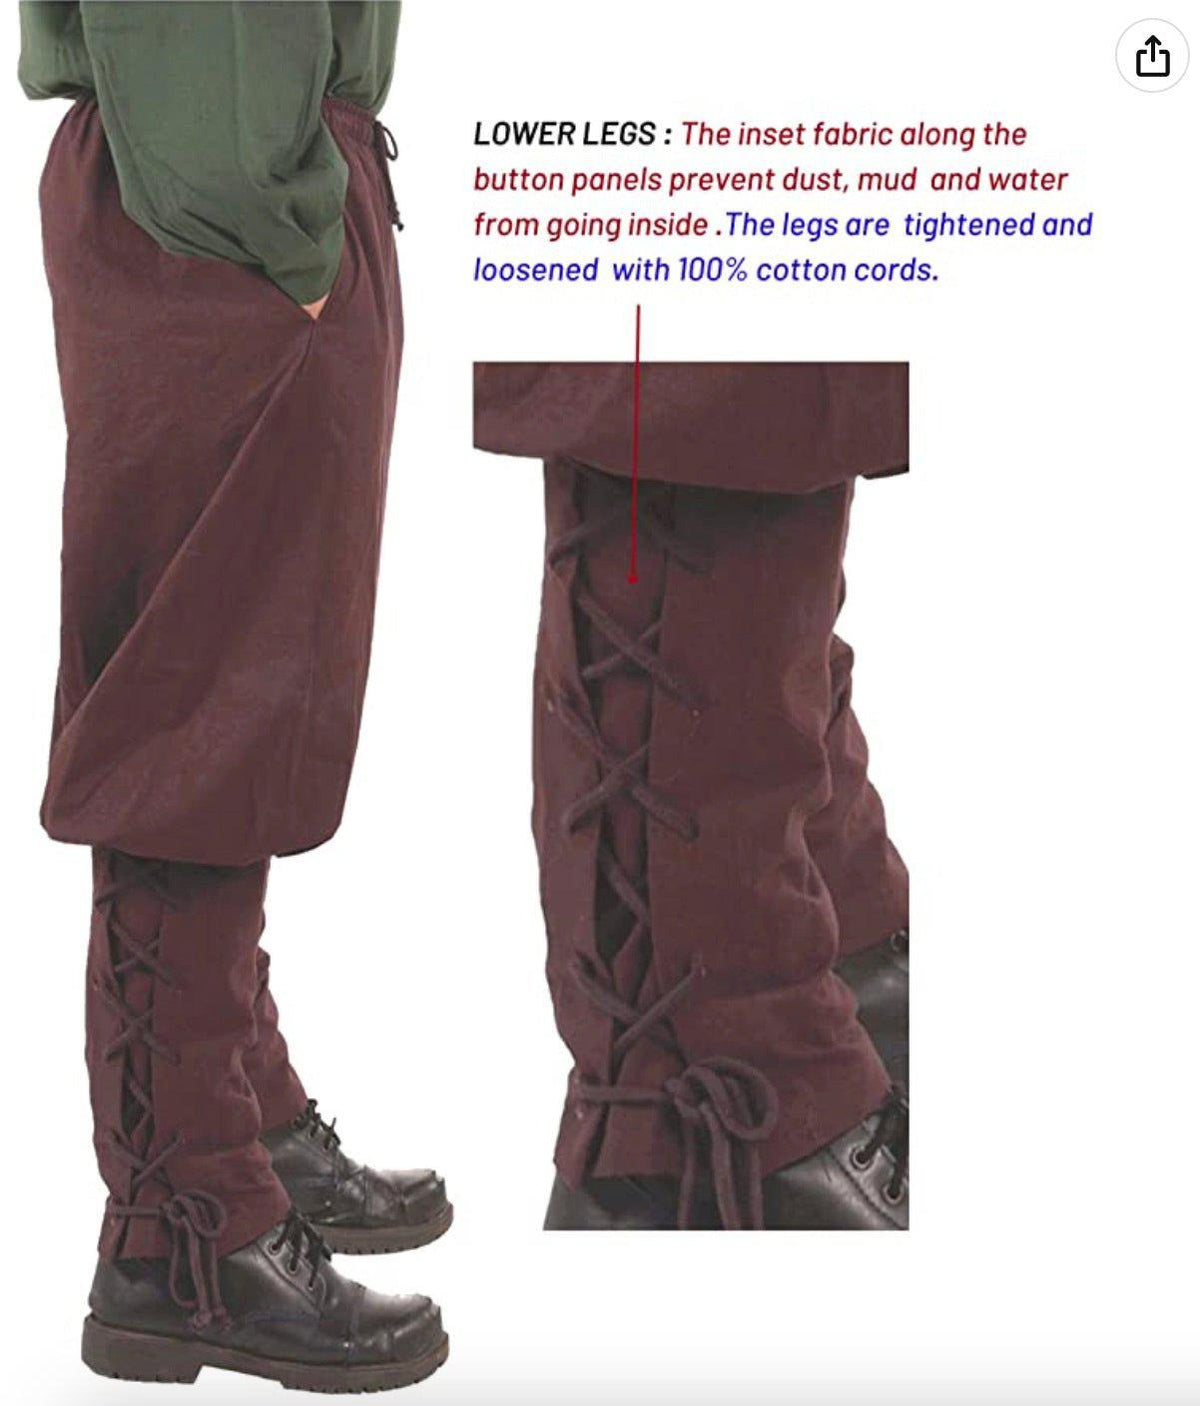 Viking LARP Linen Latticework Trousers